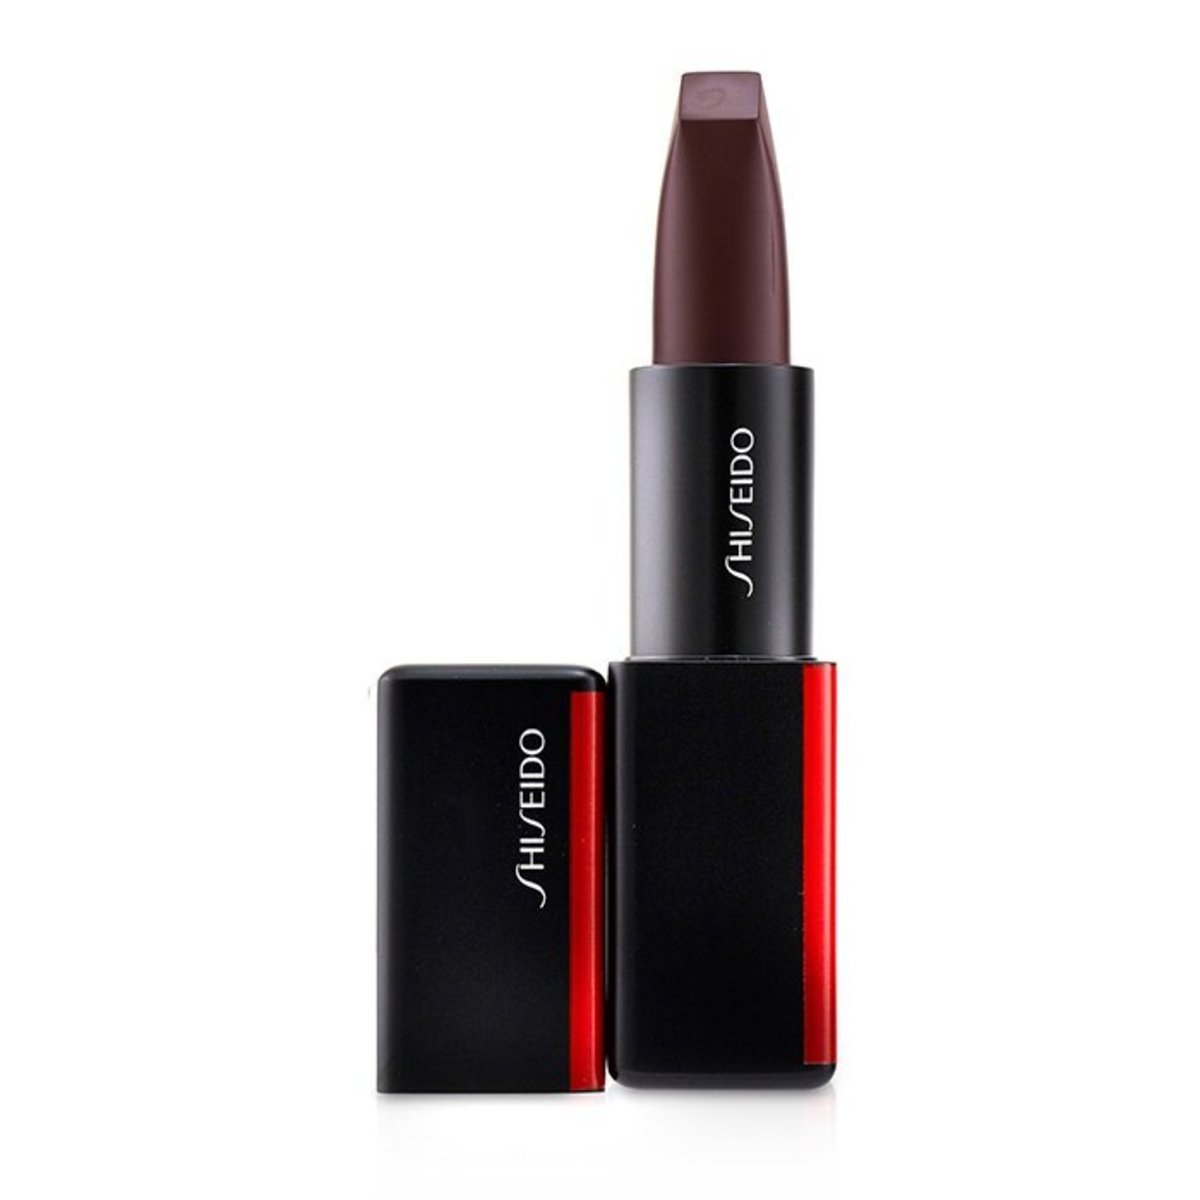 ModernMatte Powder Lipstick - # 521 Nocturnal (Brick Red) 4g/0.14oz - [Parallel Import Product]